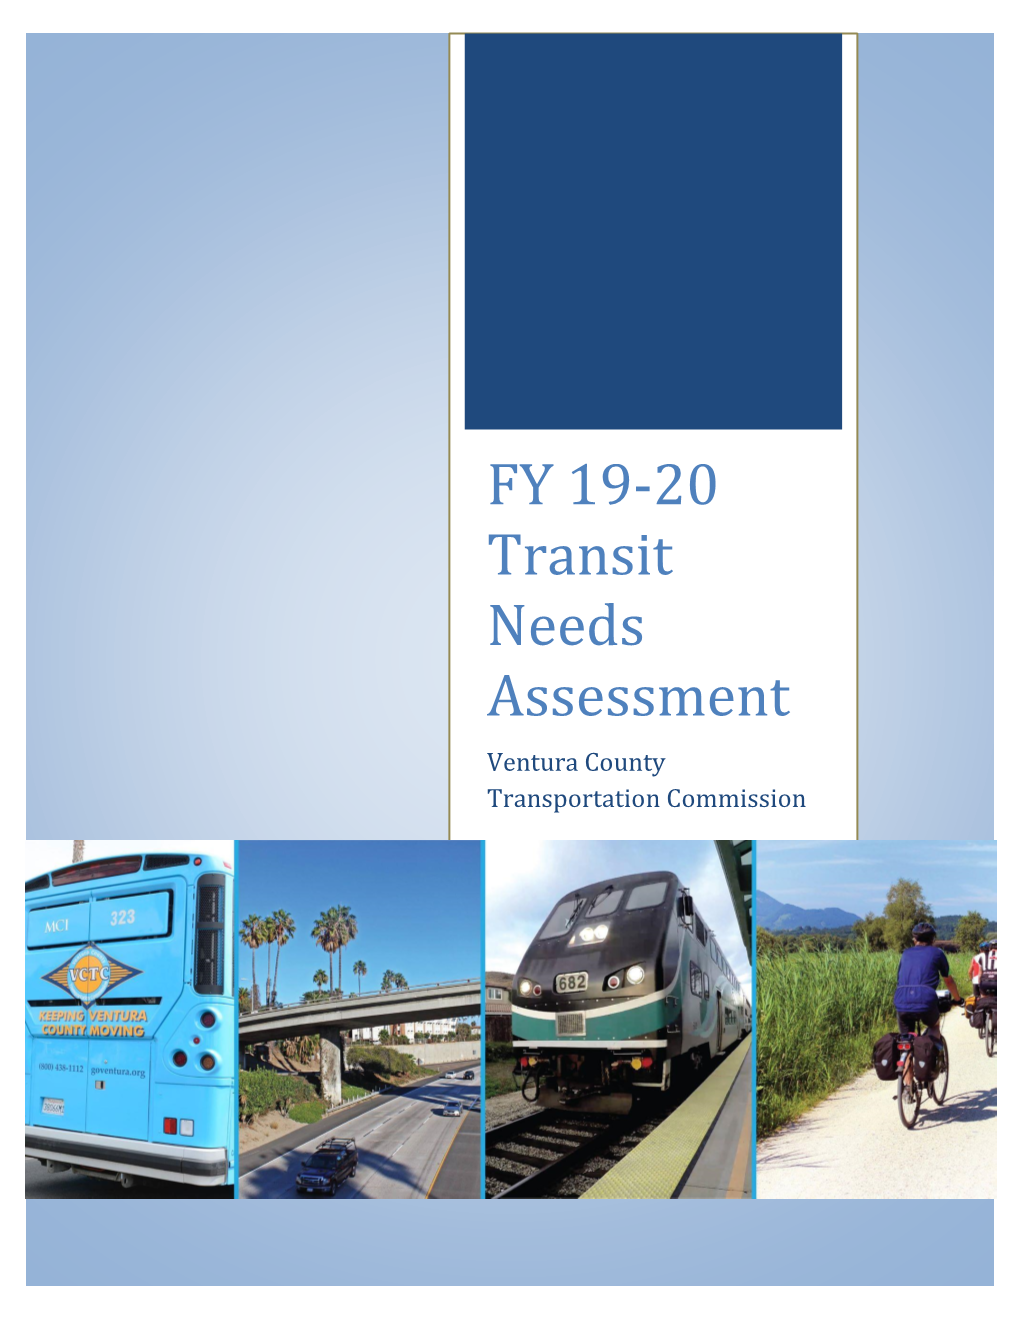 FY 19-20 Transit Needs Assessment